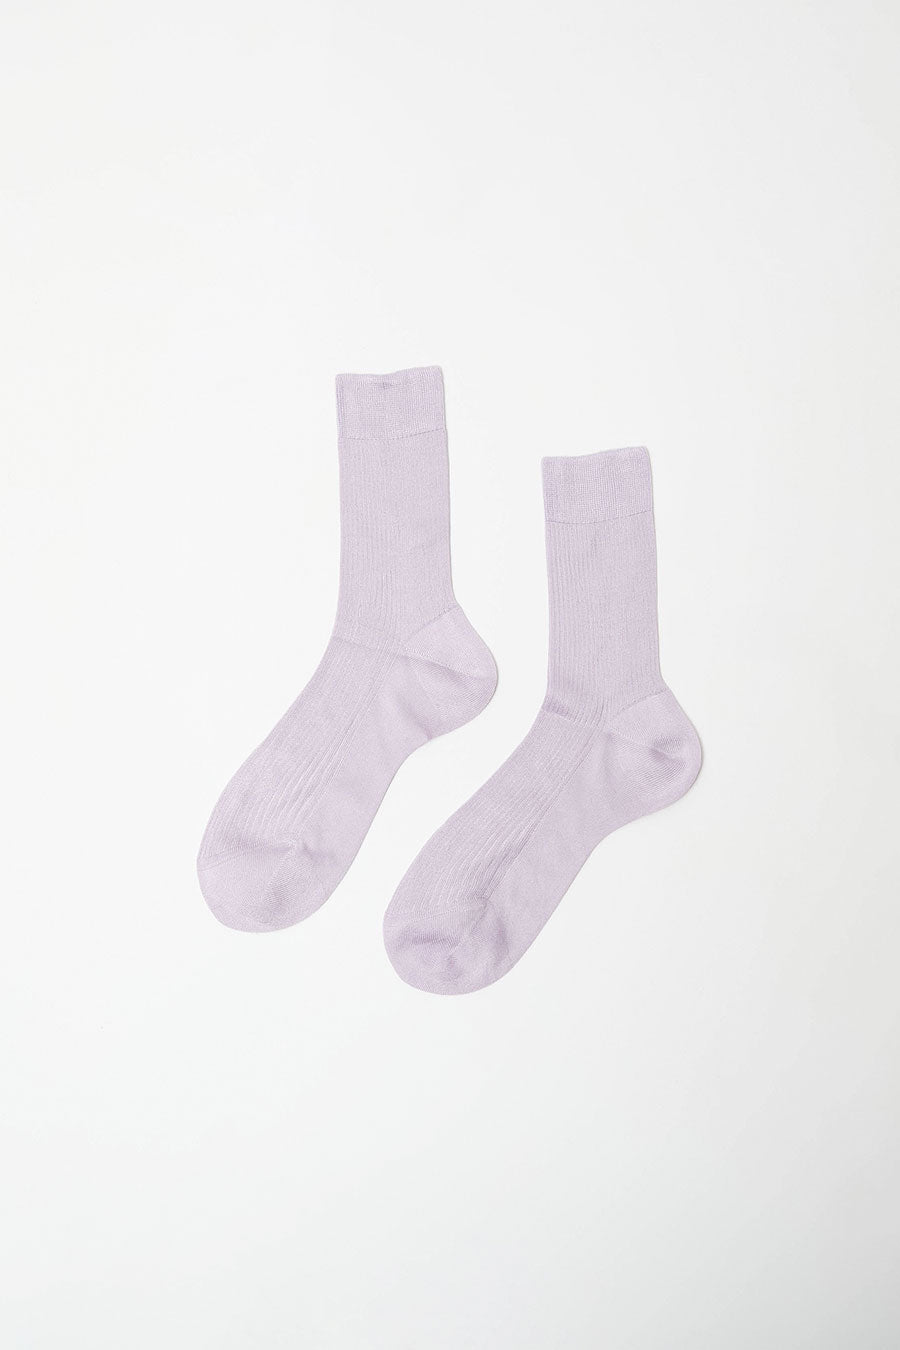 Maria La Rosa Silk Ribbed Ankle Socks in Glicine